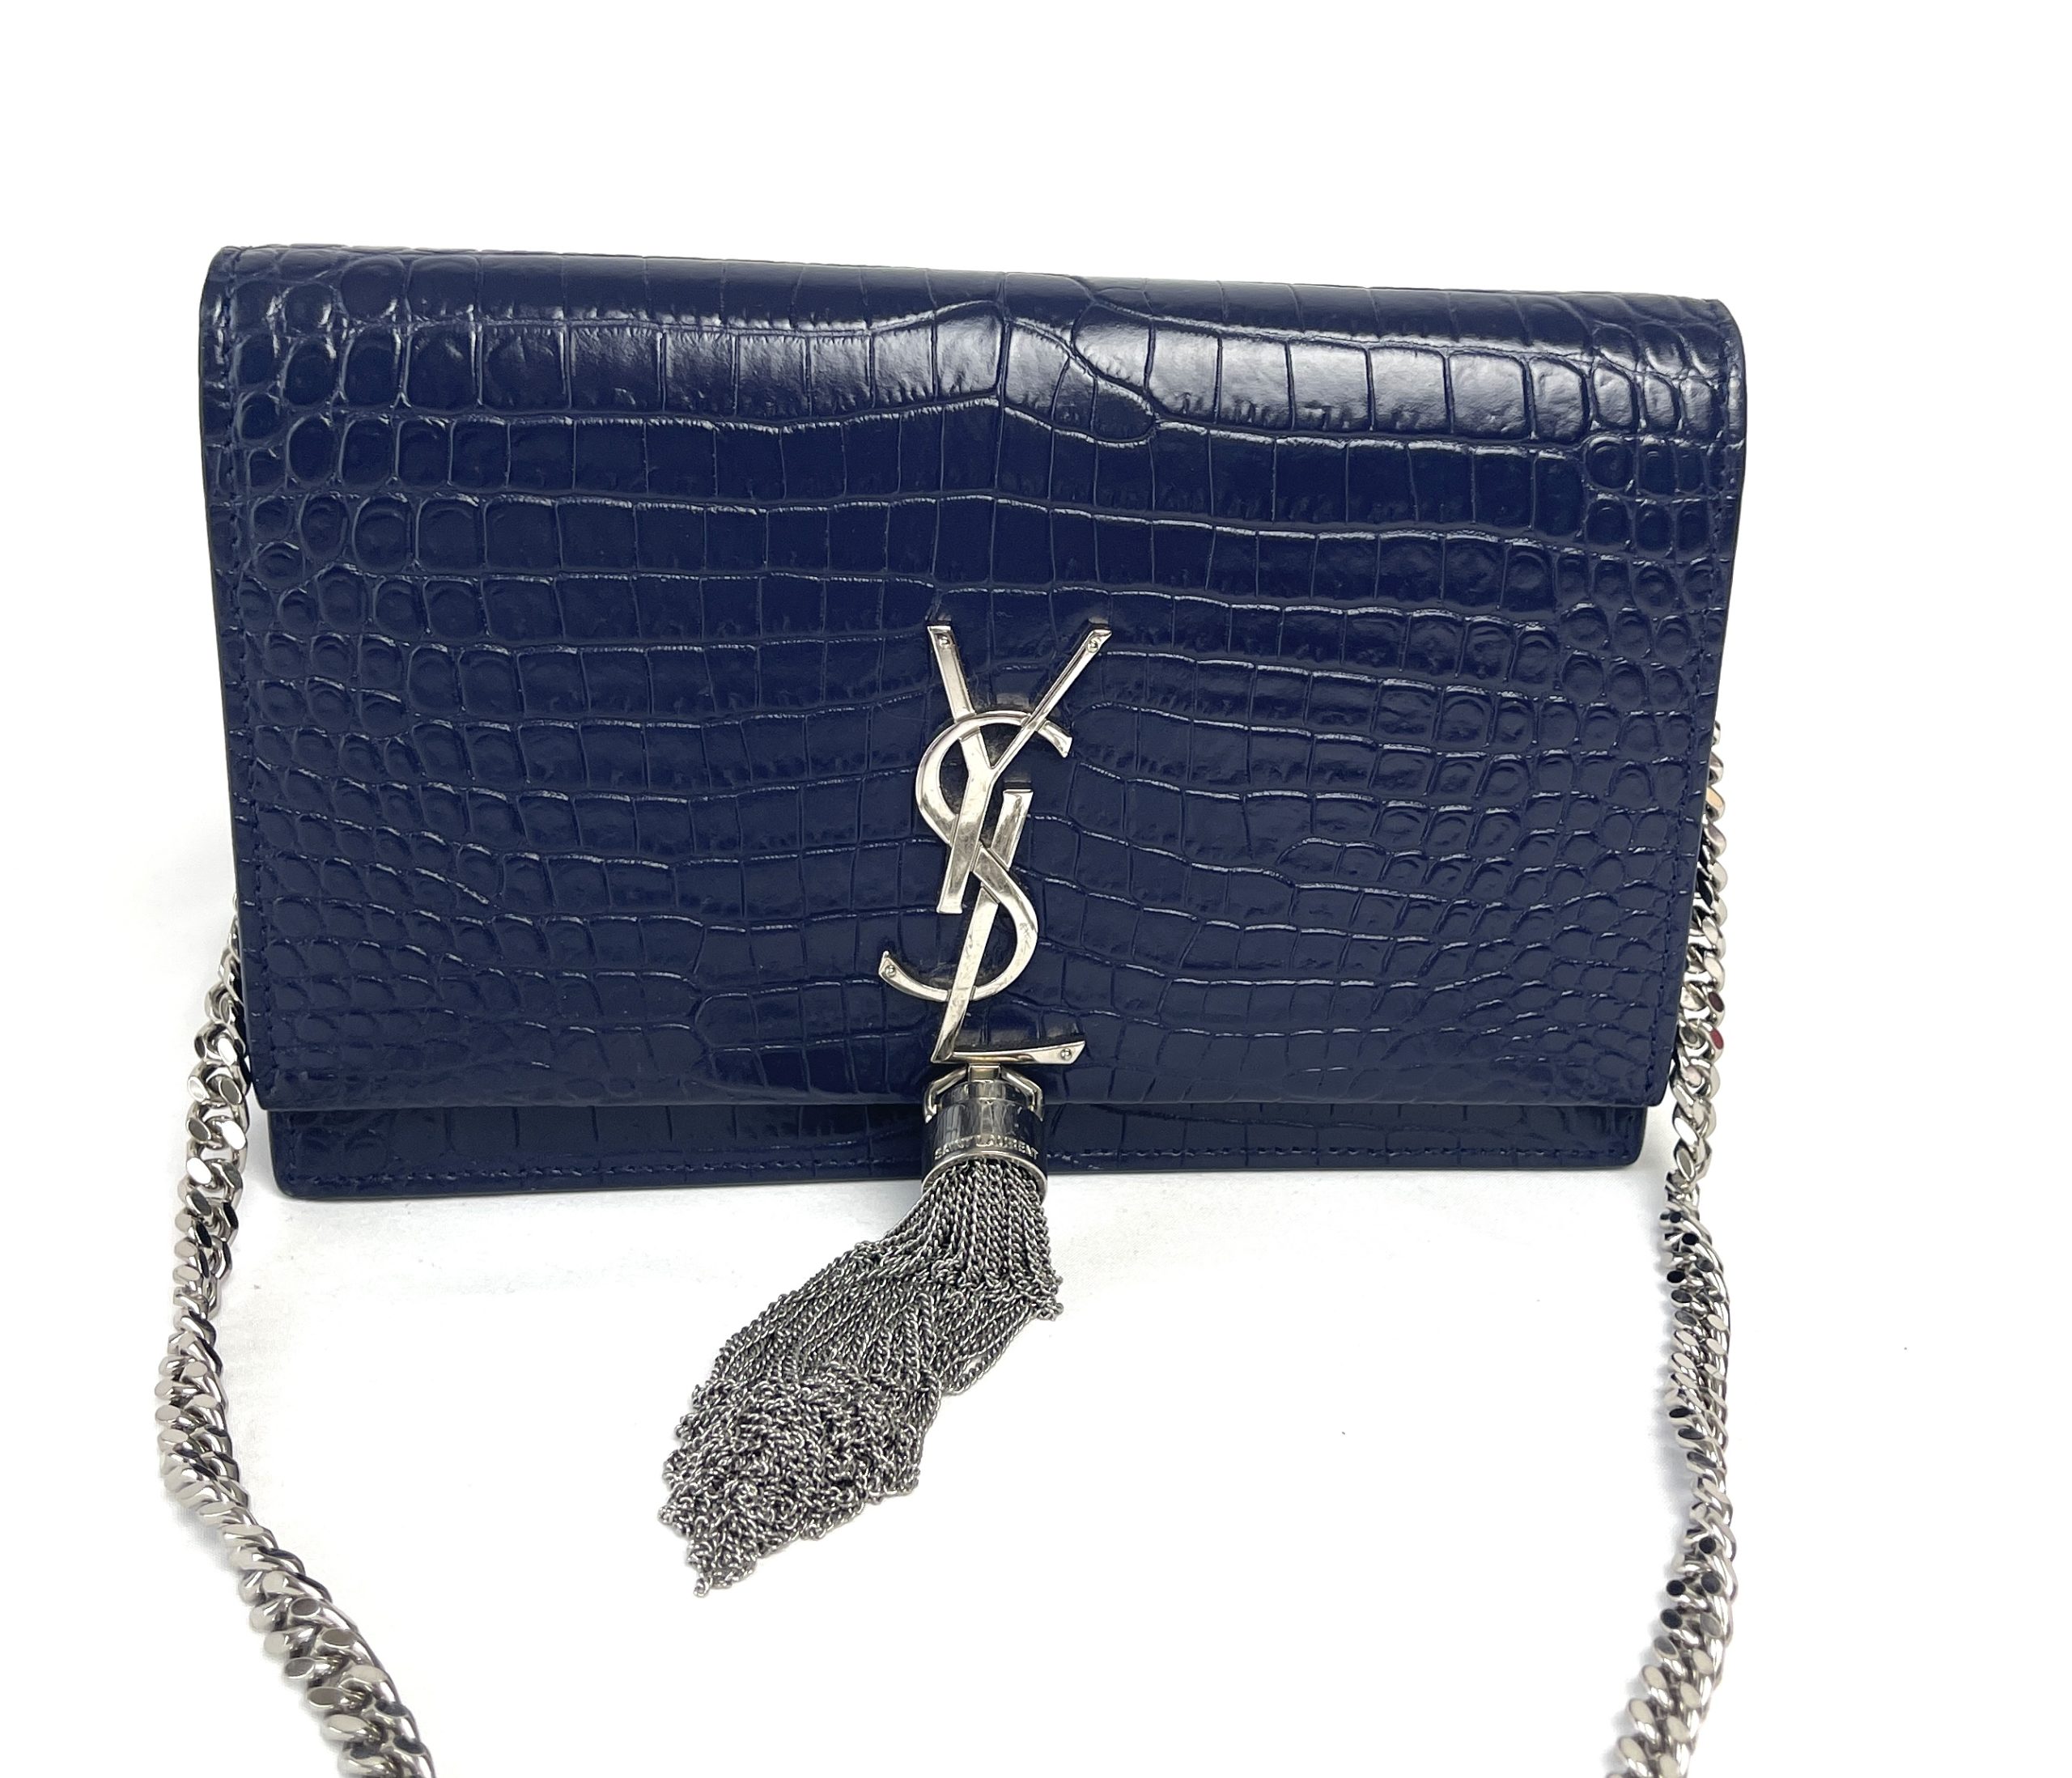 Buy Ted Baker Women Blue Croc-Skin Patterned Large Tote Bag Online - 726221  | The Collective